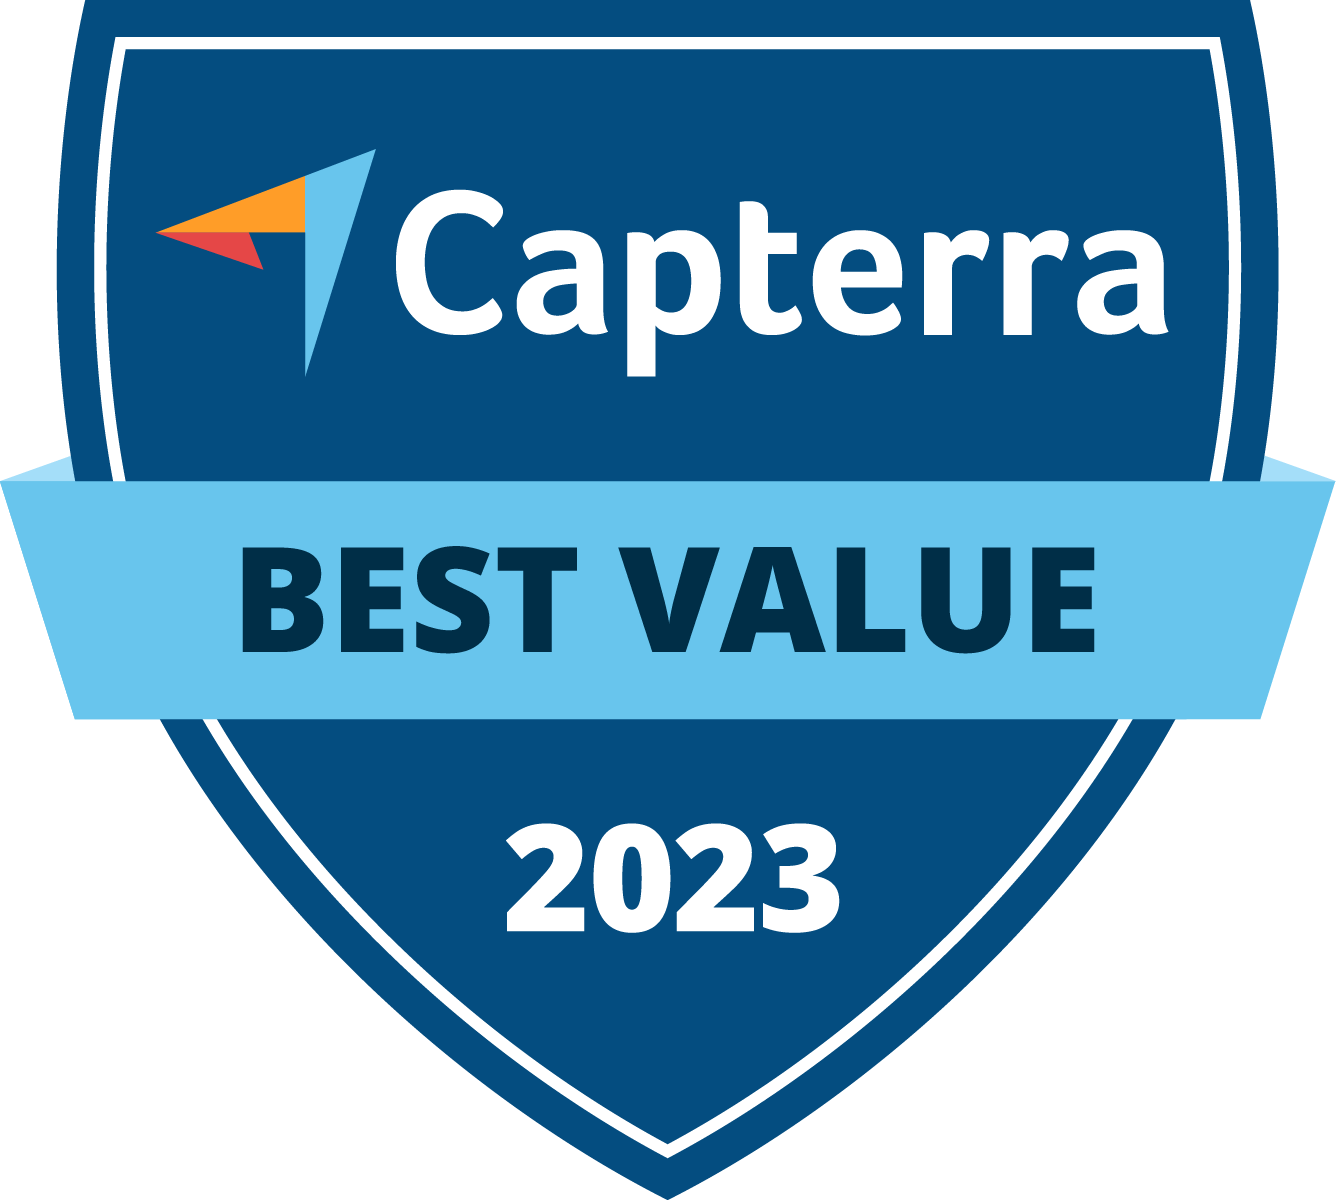 2023 Best Value Capterra